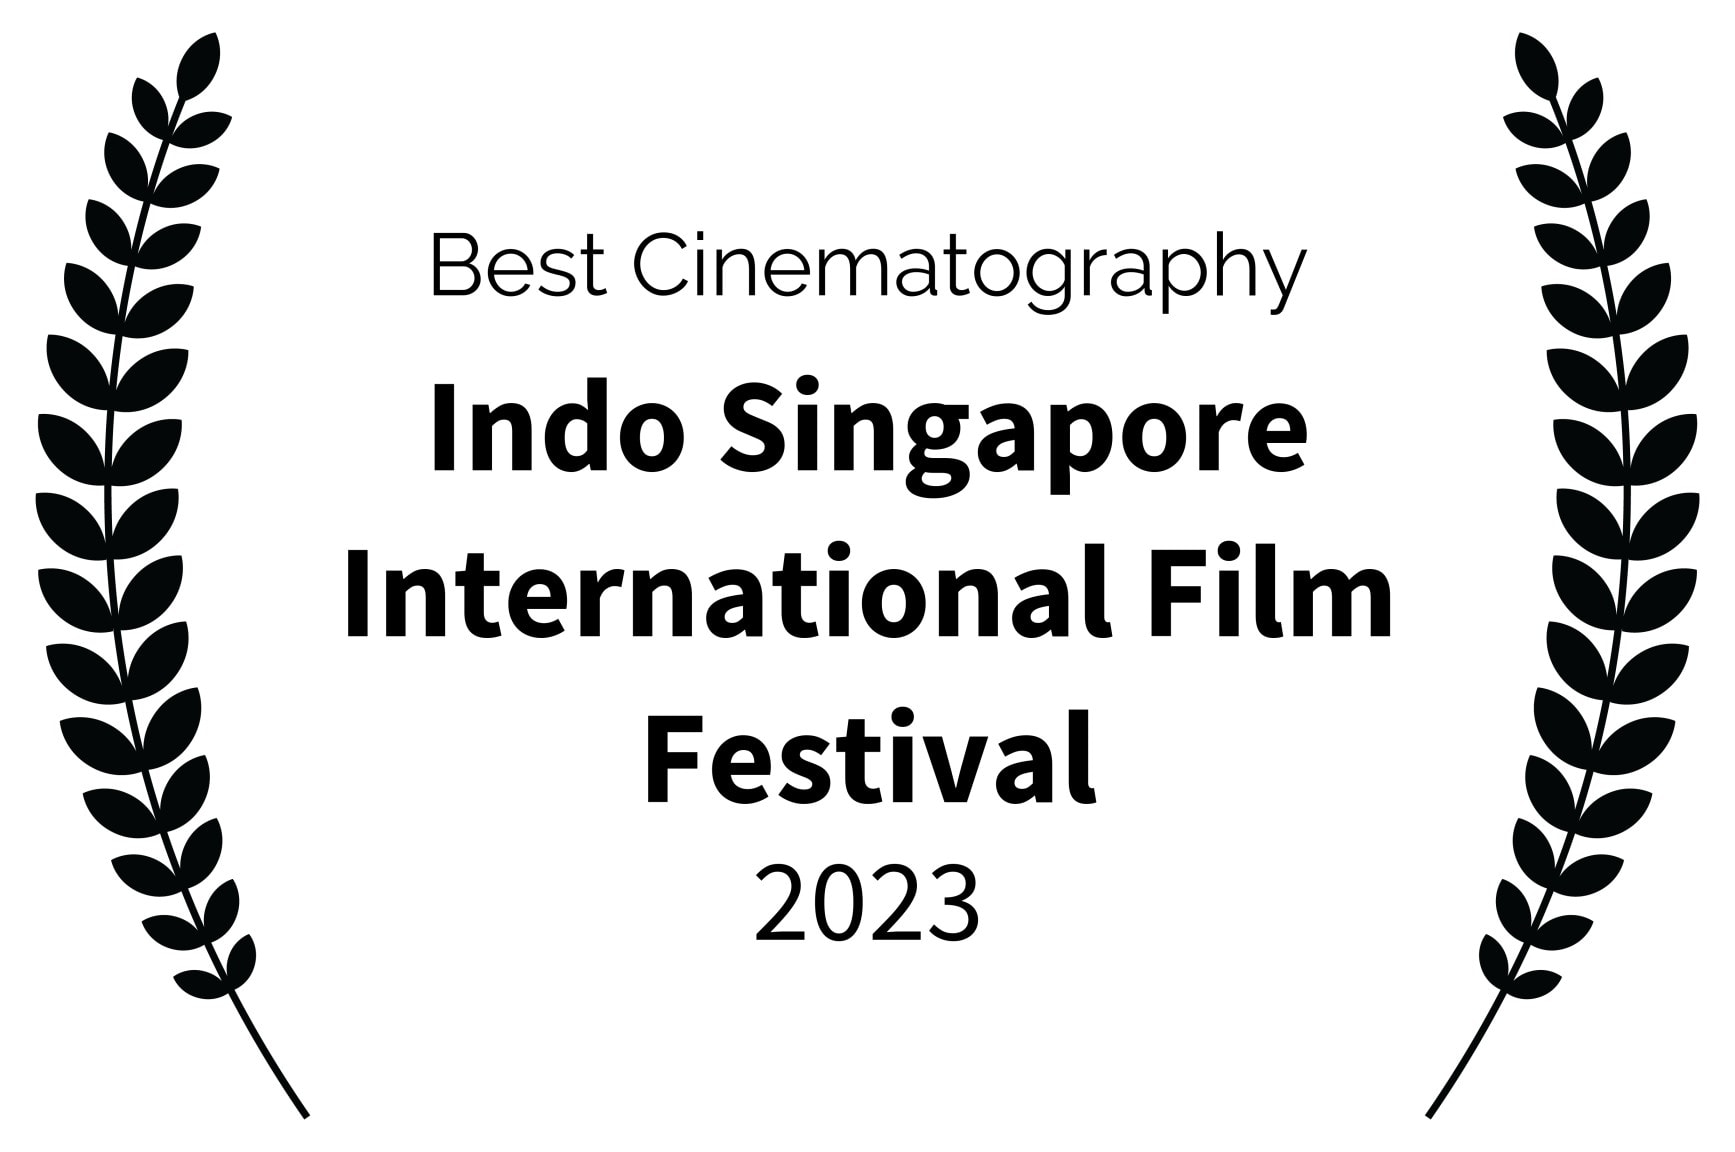 Best Cinematography - Indo Singapore International Film Festival - 2023(1)